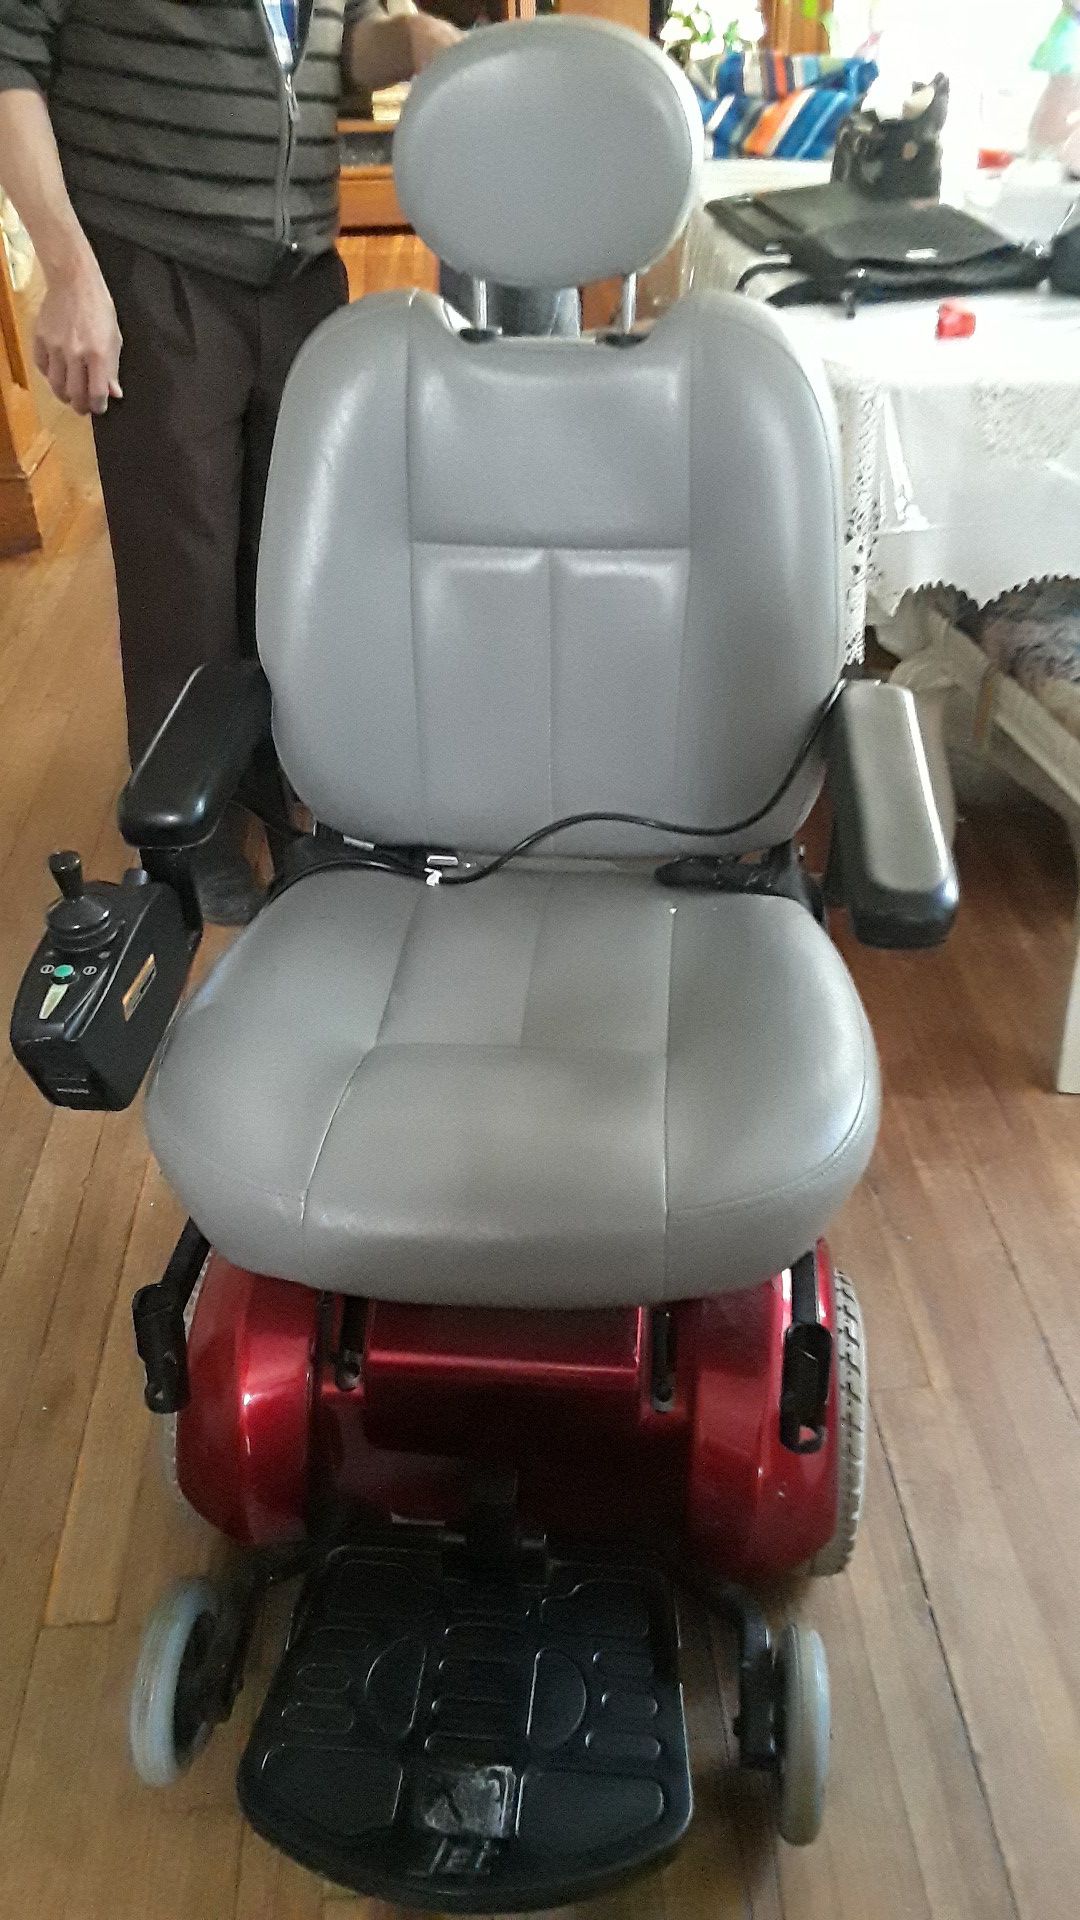 Handicap chair